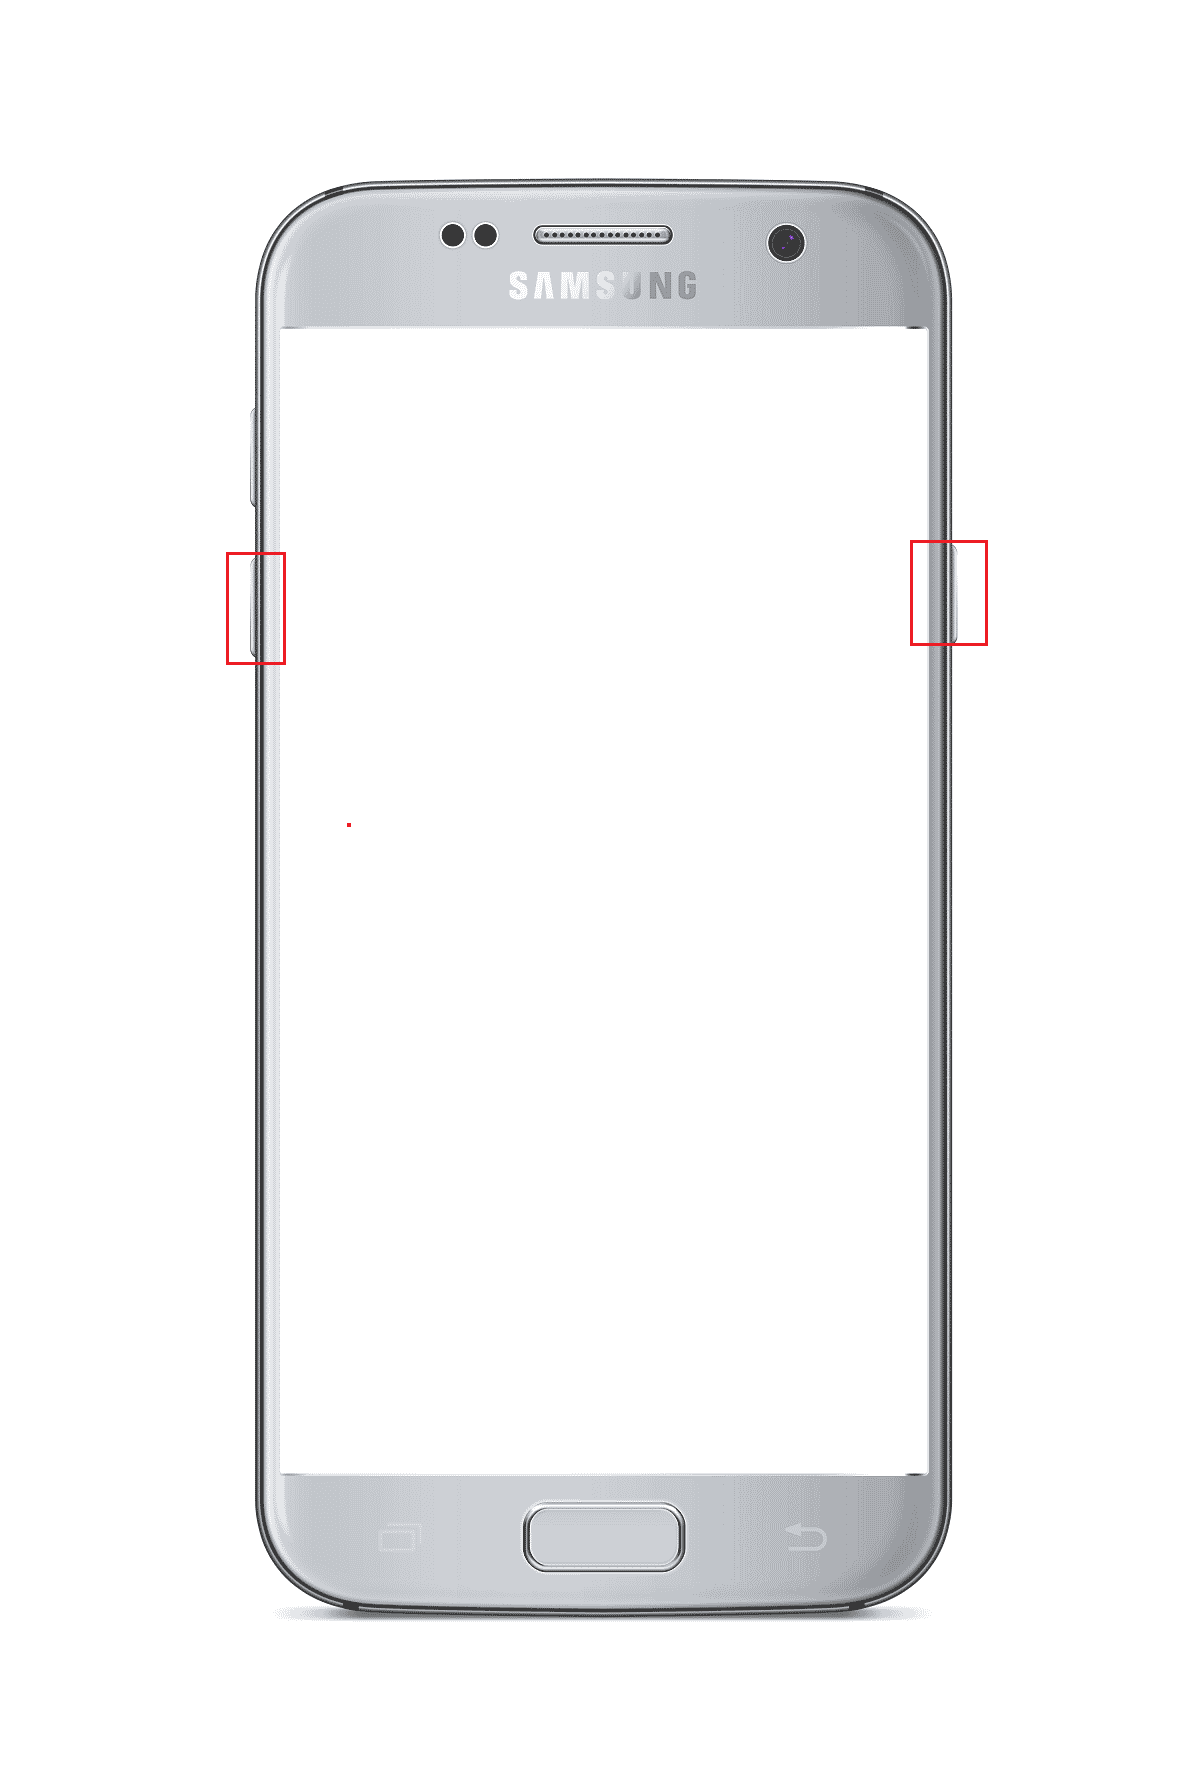 Нажмите кнопку уменьшения громкости и кнопку питания на телефоне Samsung Android